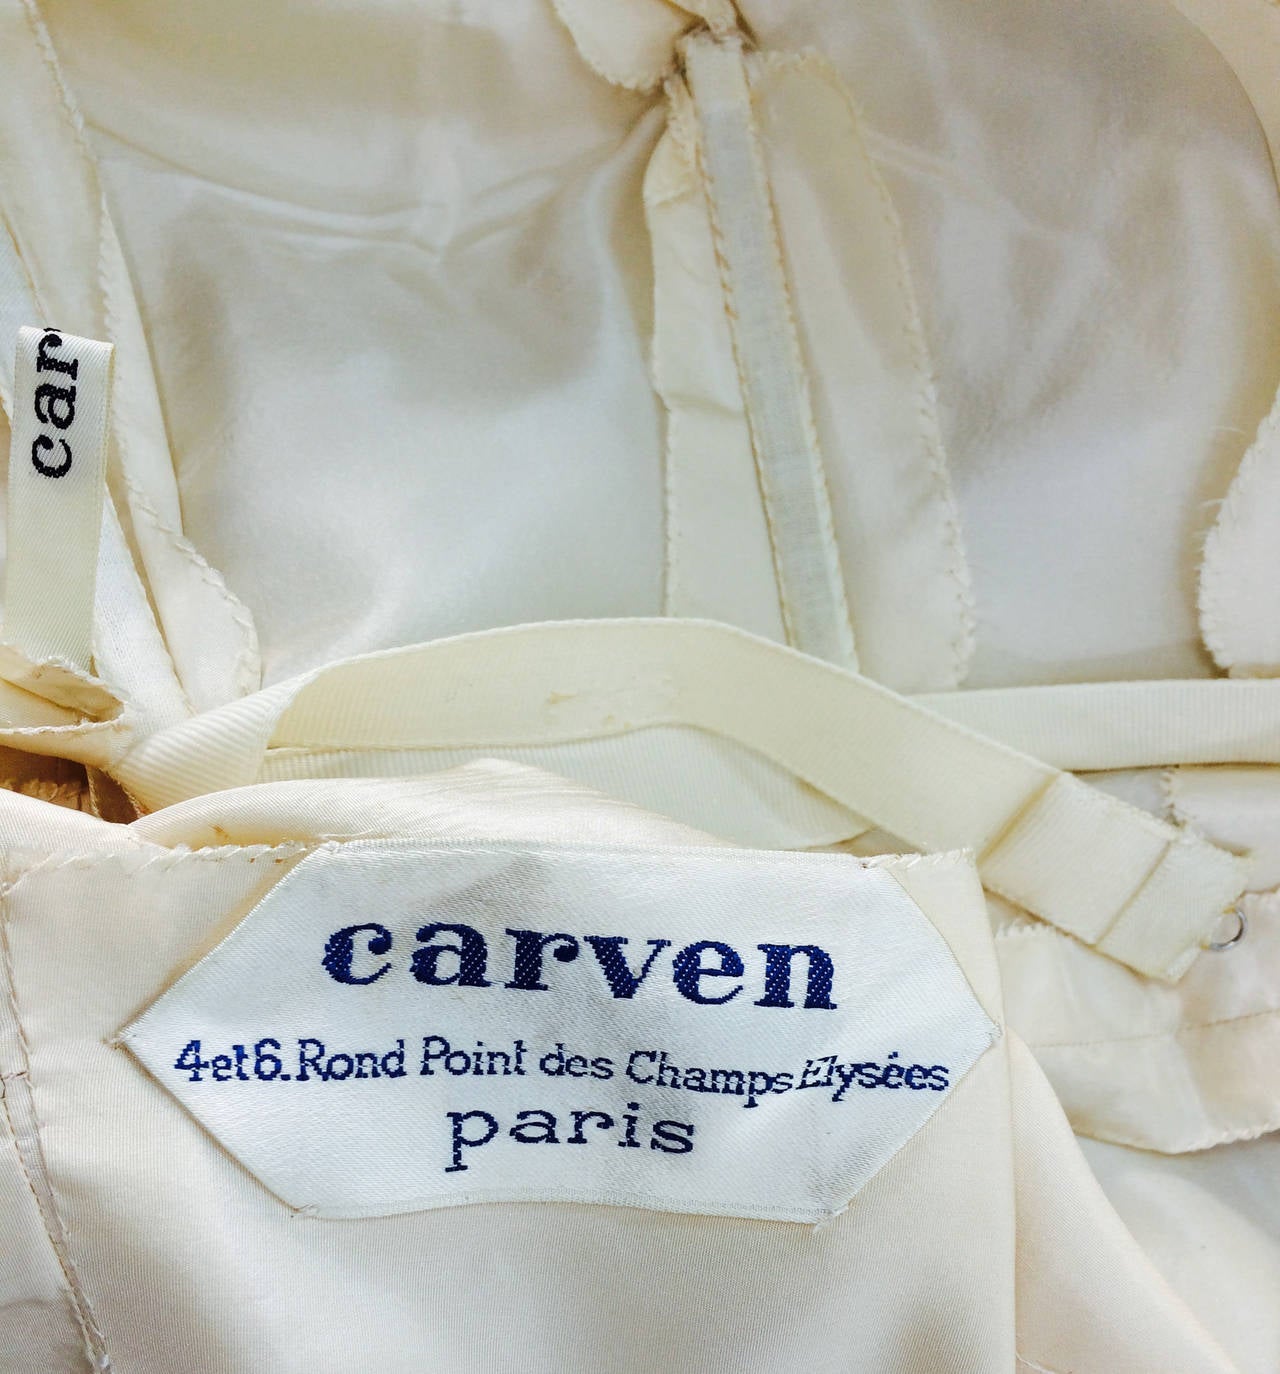 1940s Carven Paris Haute Couture rose print ivory chiffon afternoon dress 6